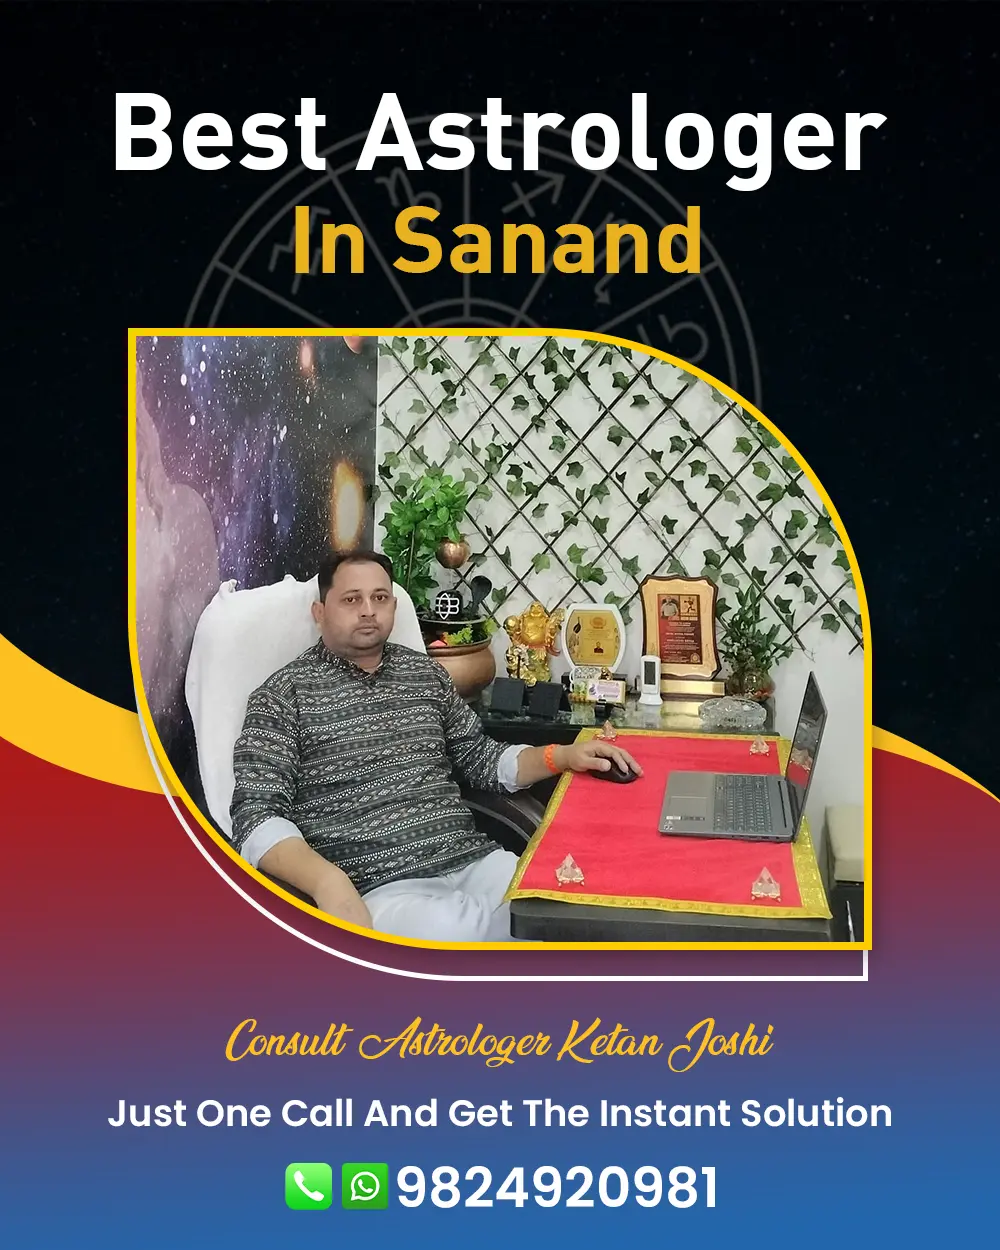 Best Astrologer In Sanand